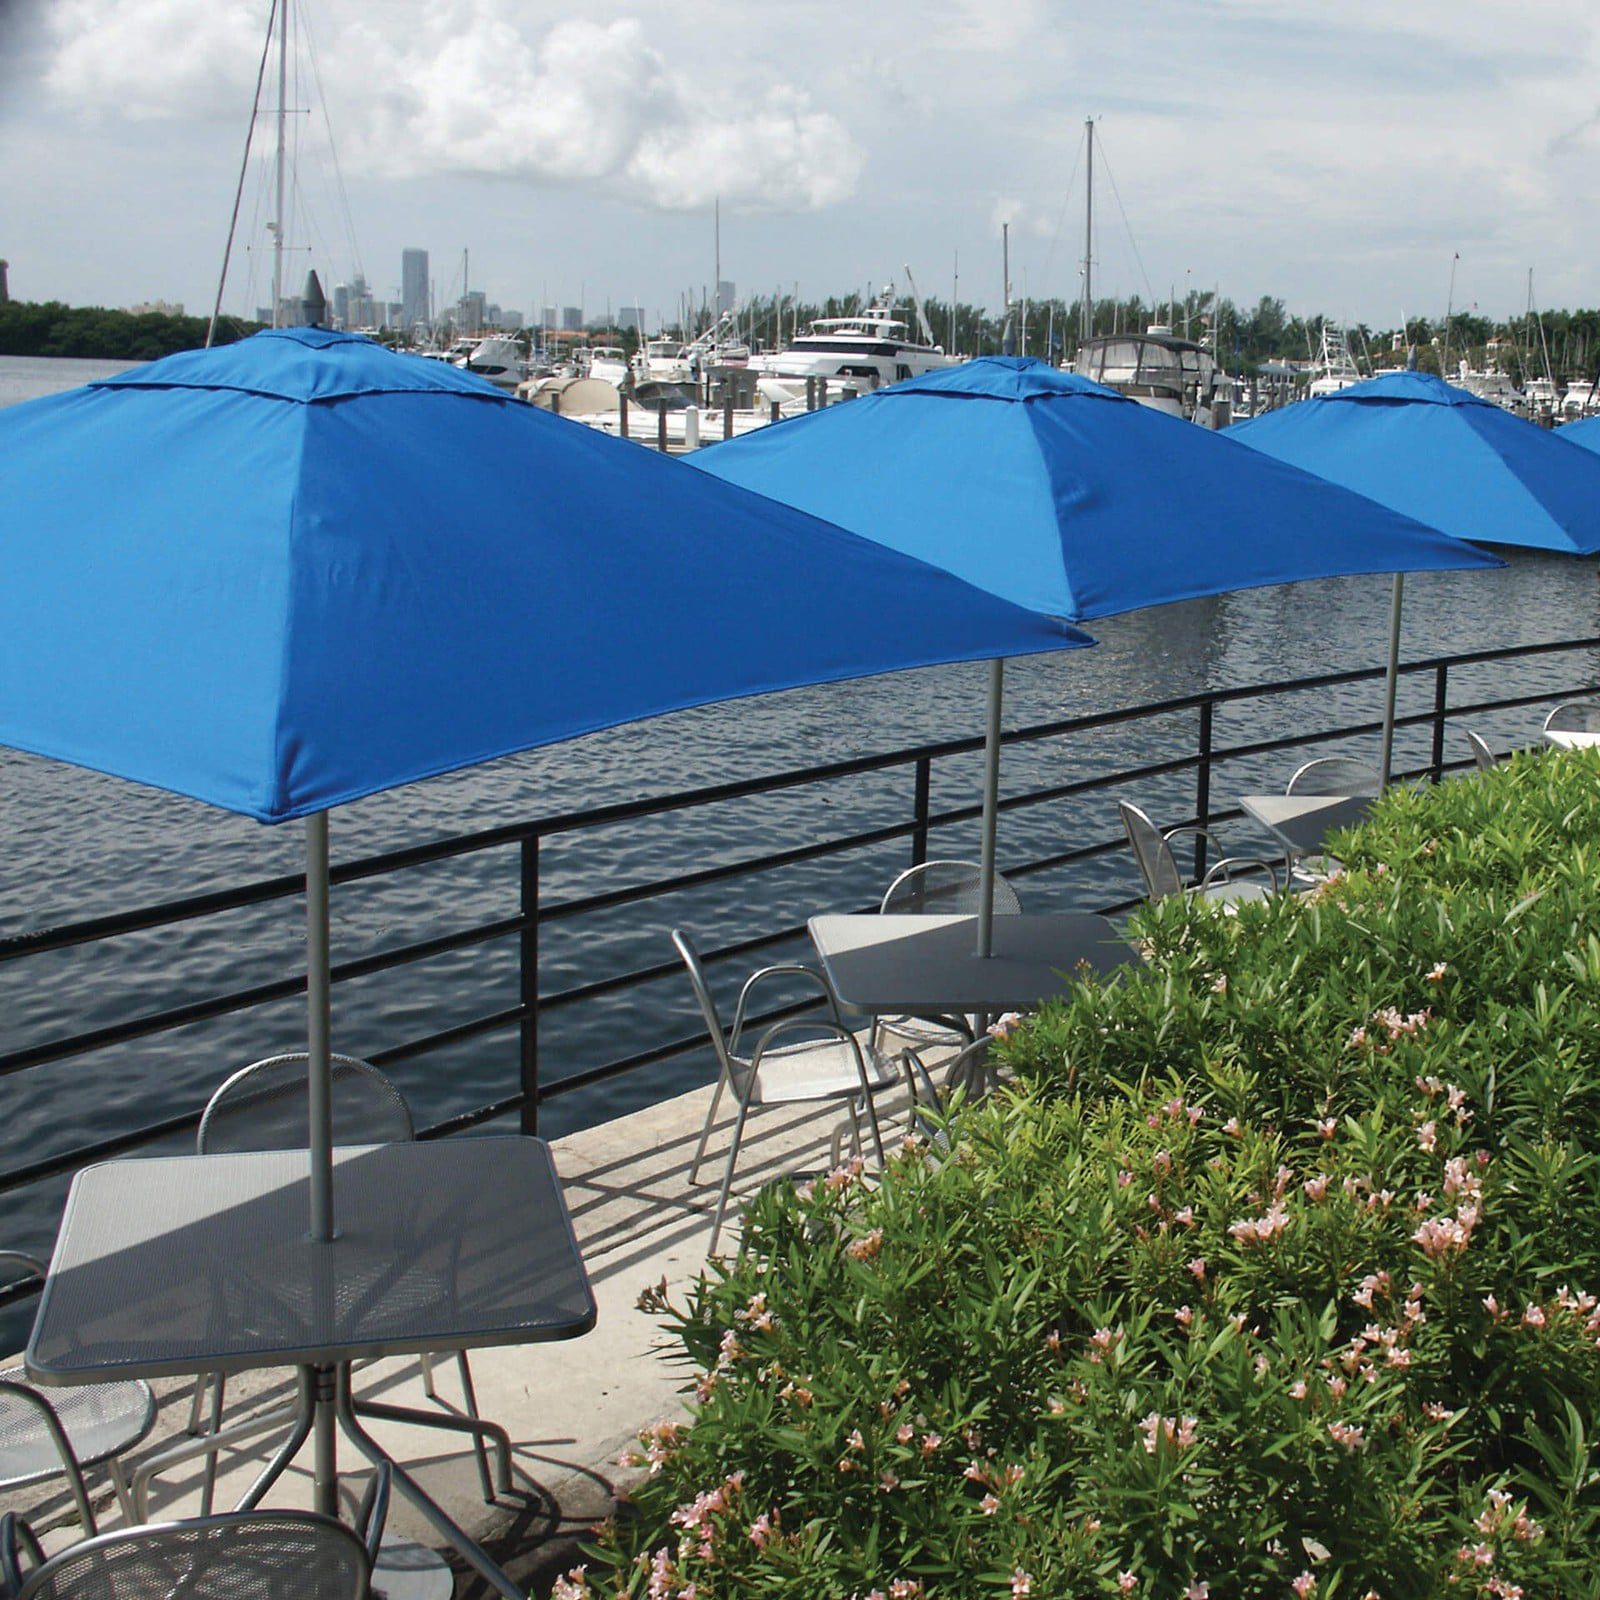 Tuuci Bay Master Fiberglass Umbrellas, Commercial Marina - Blue